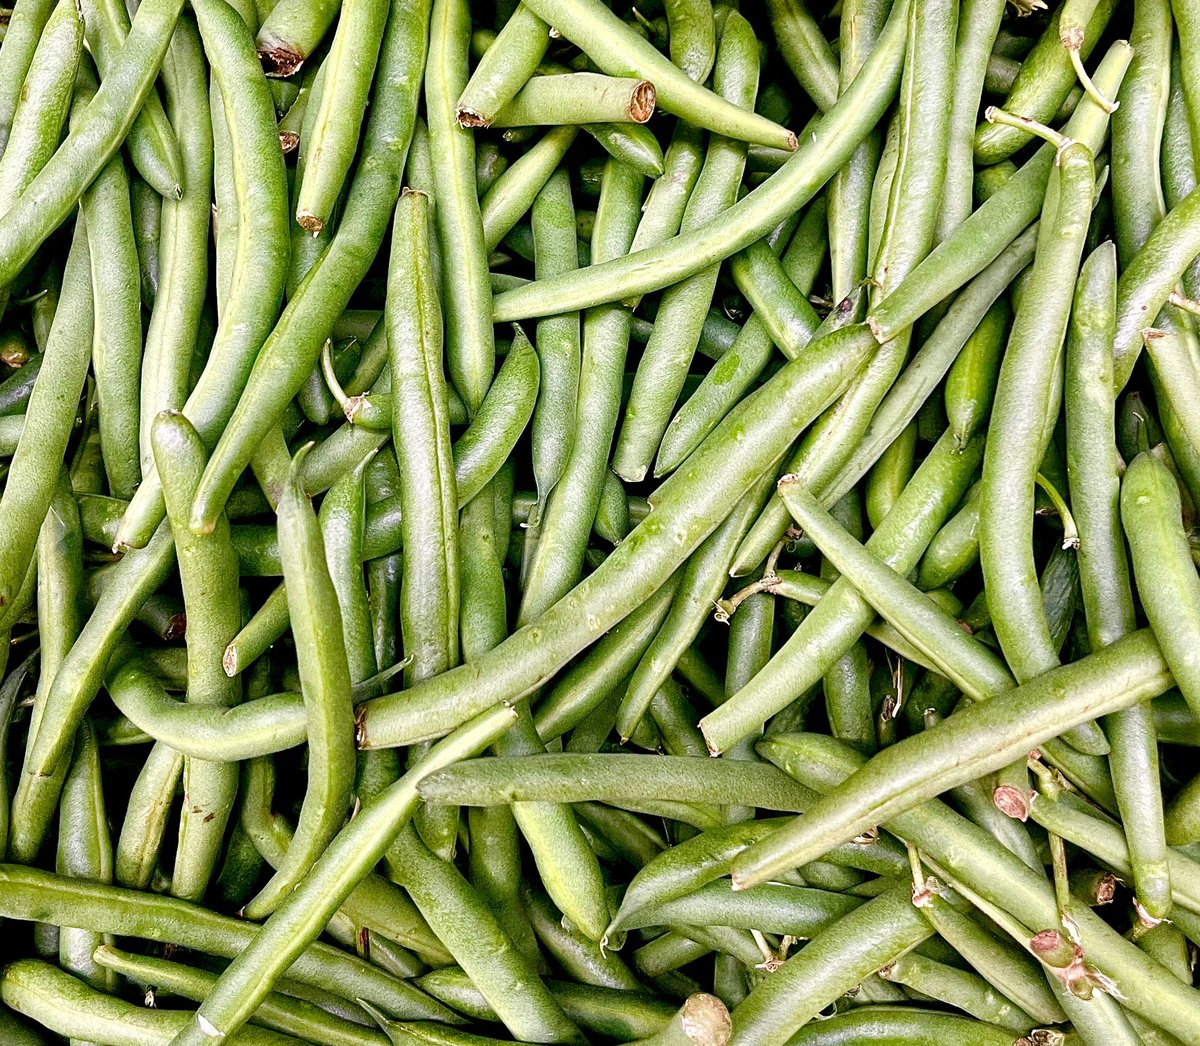 Green beans anyone? 💚💚💚